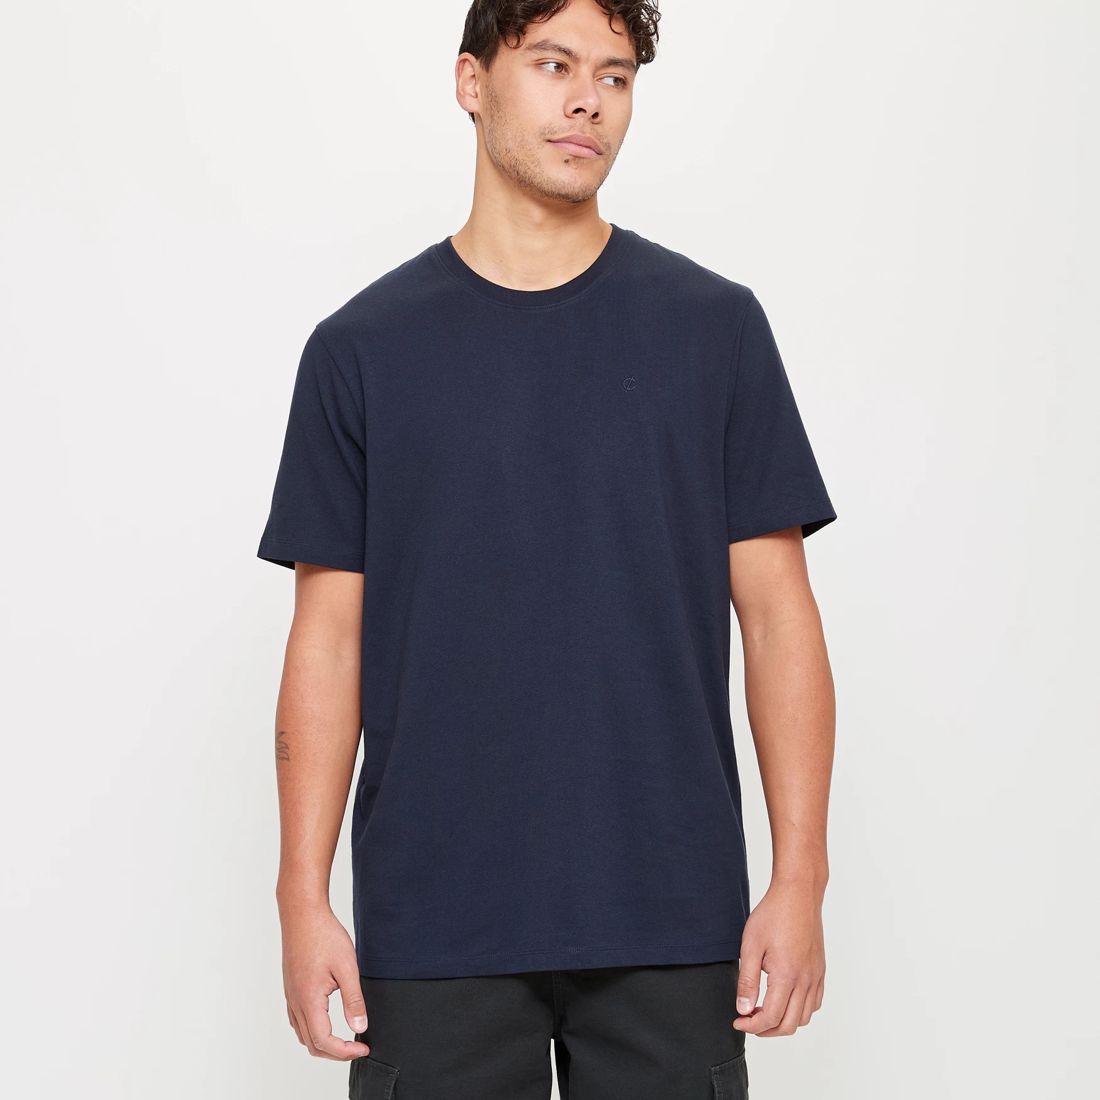 Commons Core T-Shirt | Target Australia